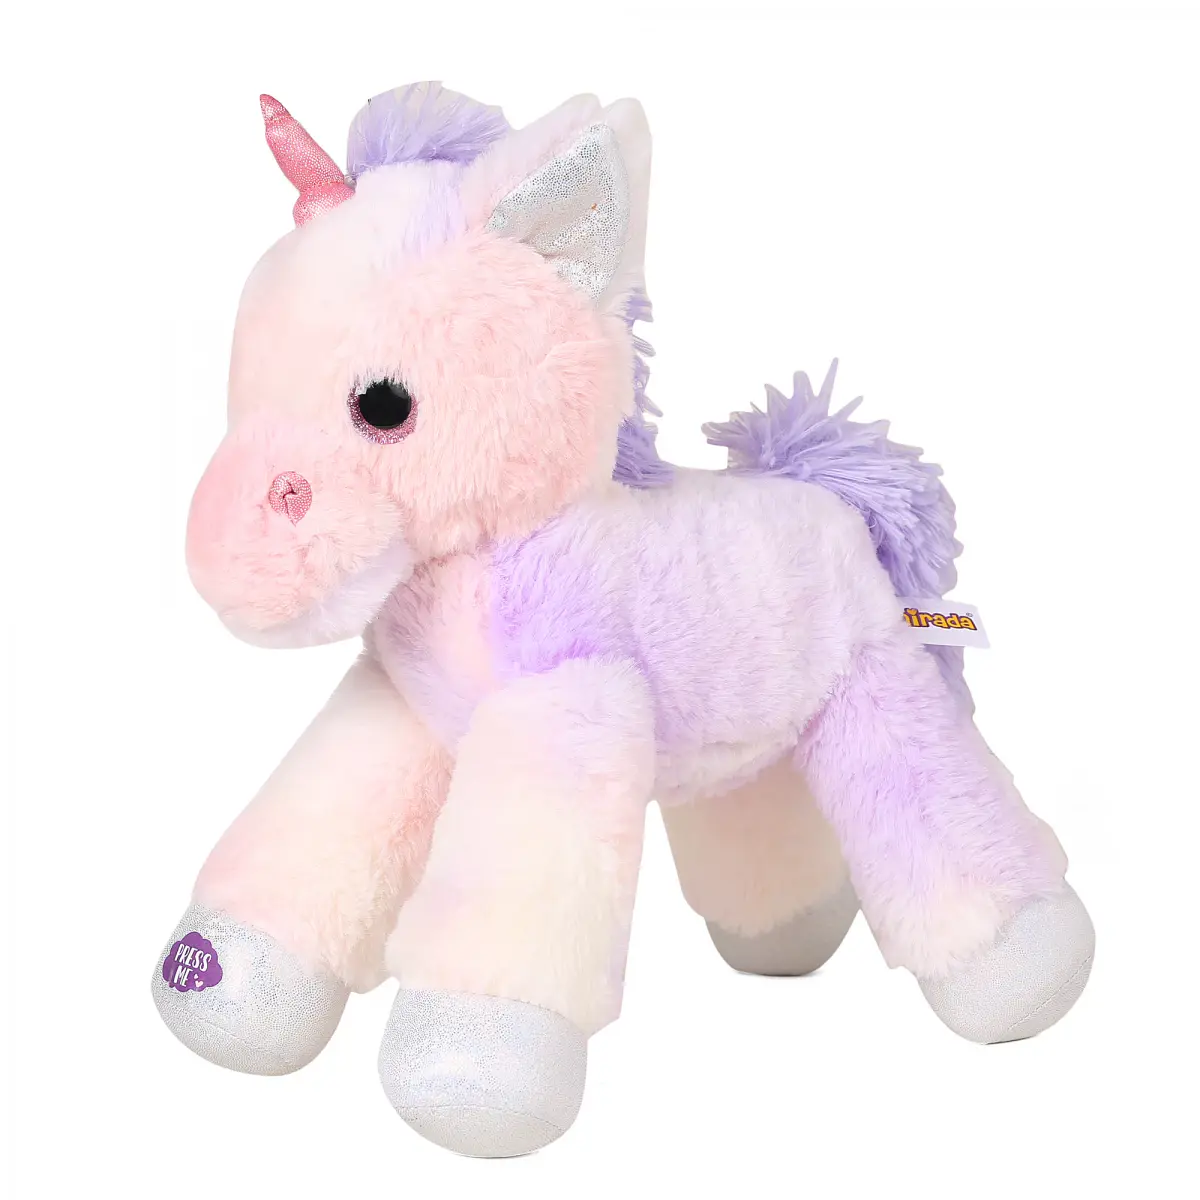 Mirada Unicorn Soft Toy for Kids, 40cm, 18M+, Multicolour